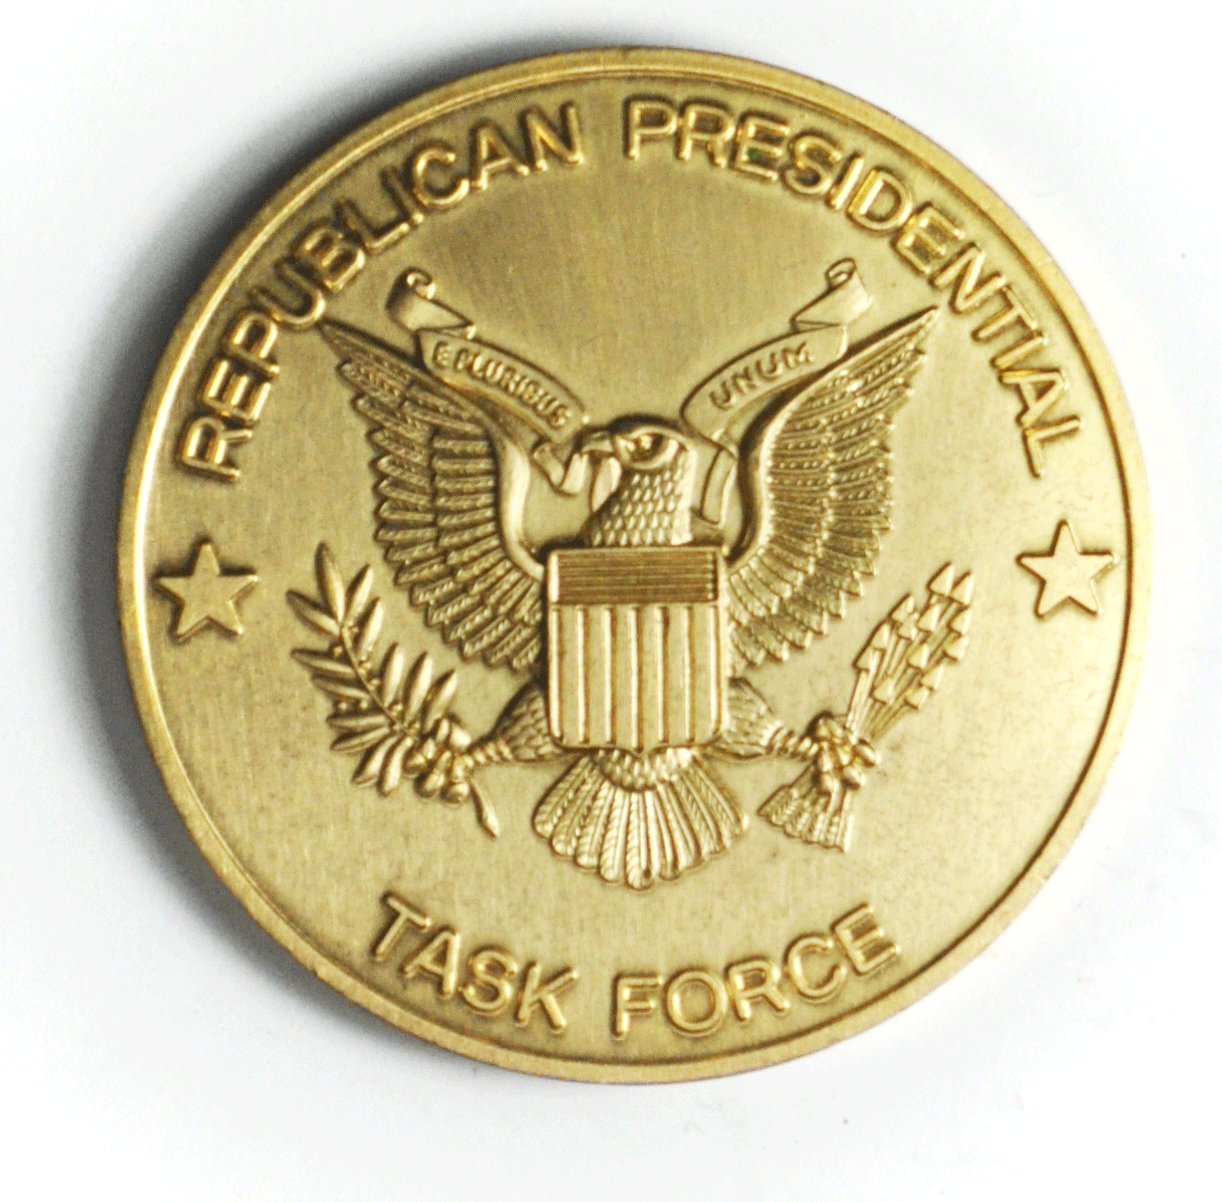 Ronald Reagan Founder Medal of Merit Republican Presidential Task Force 52mm